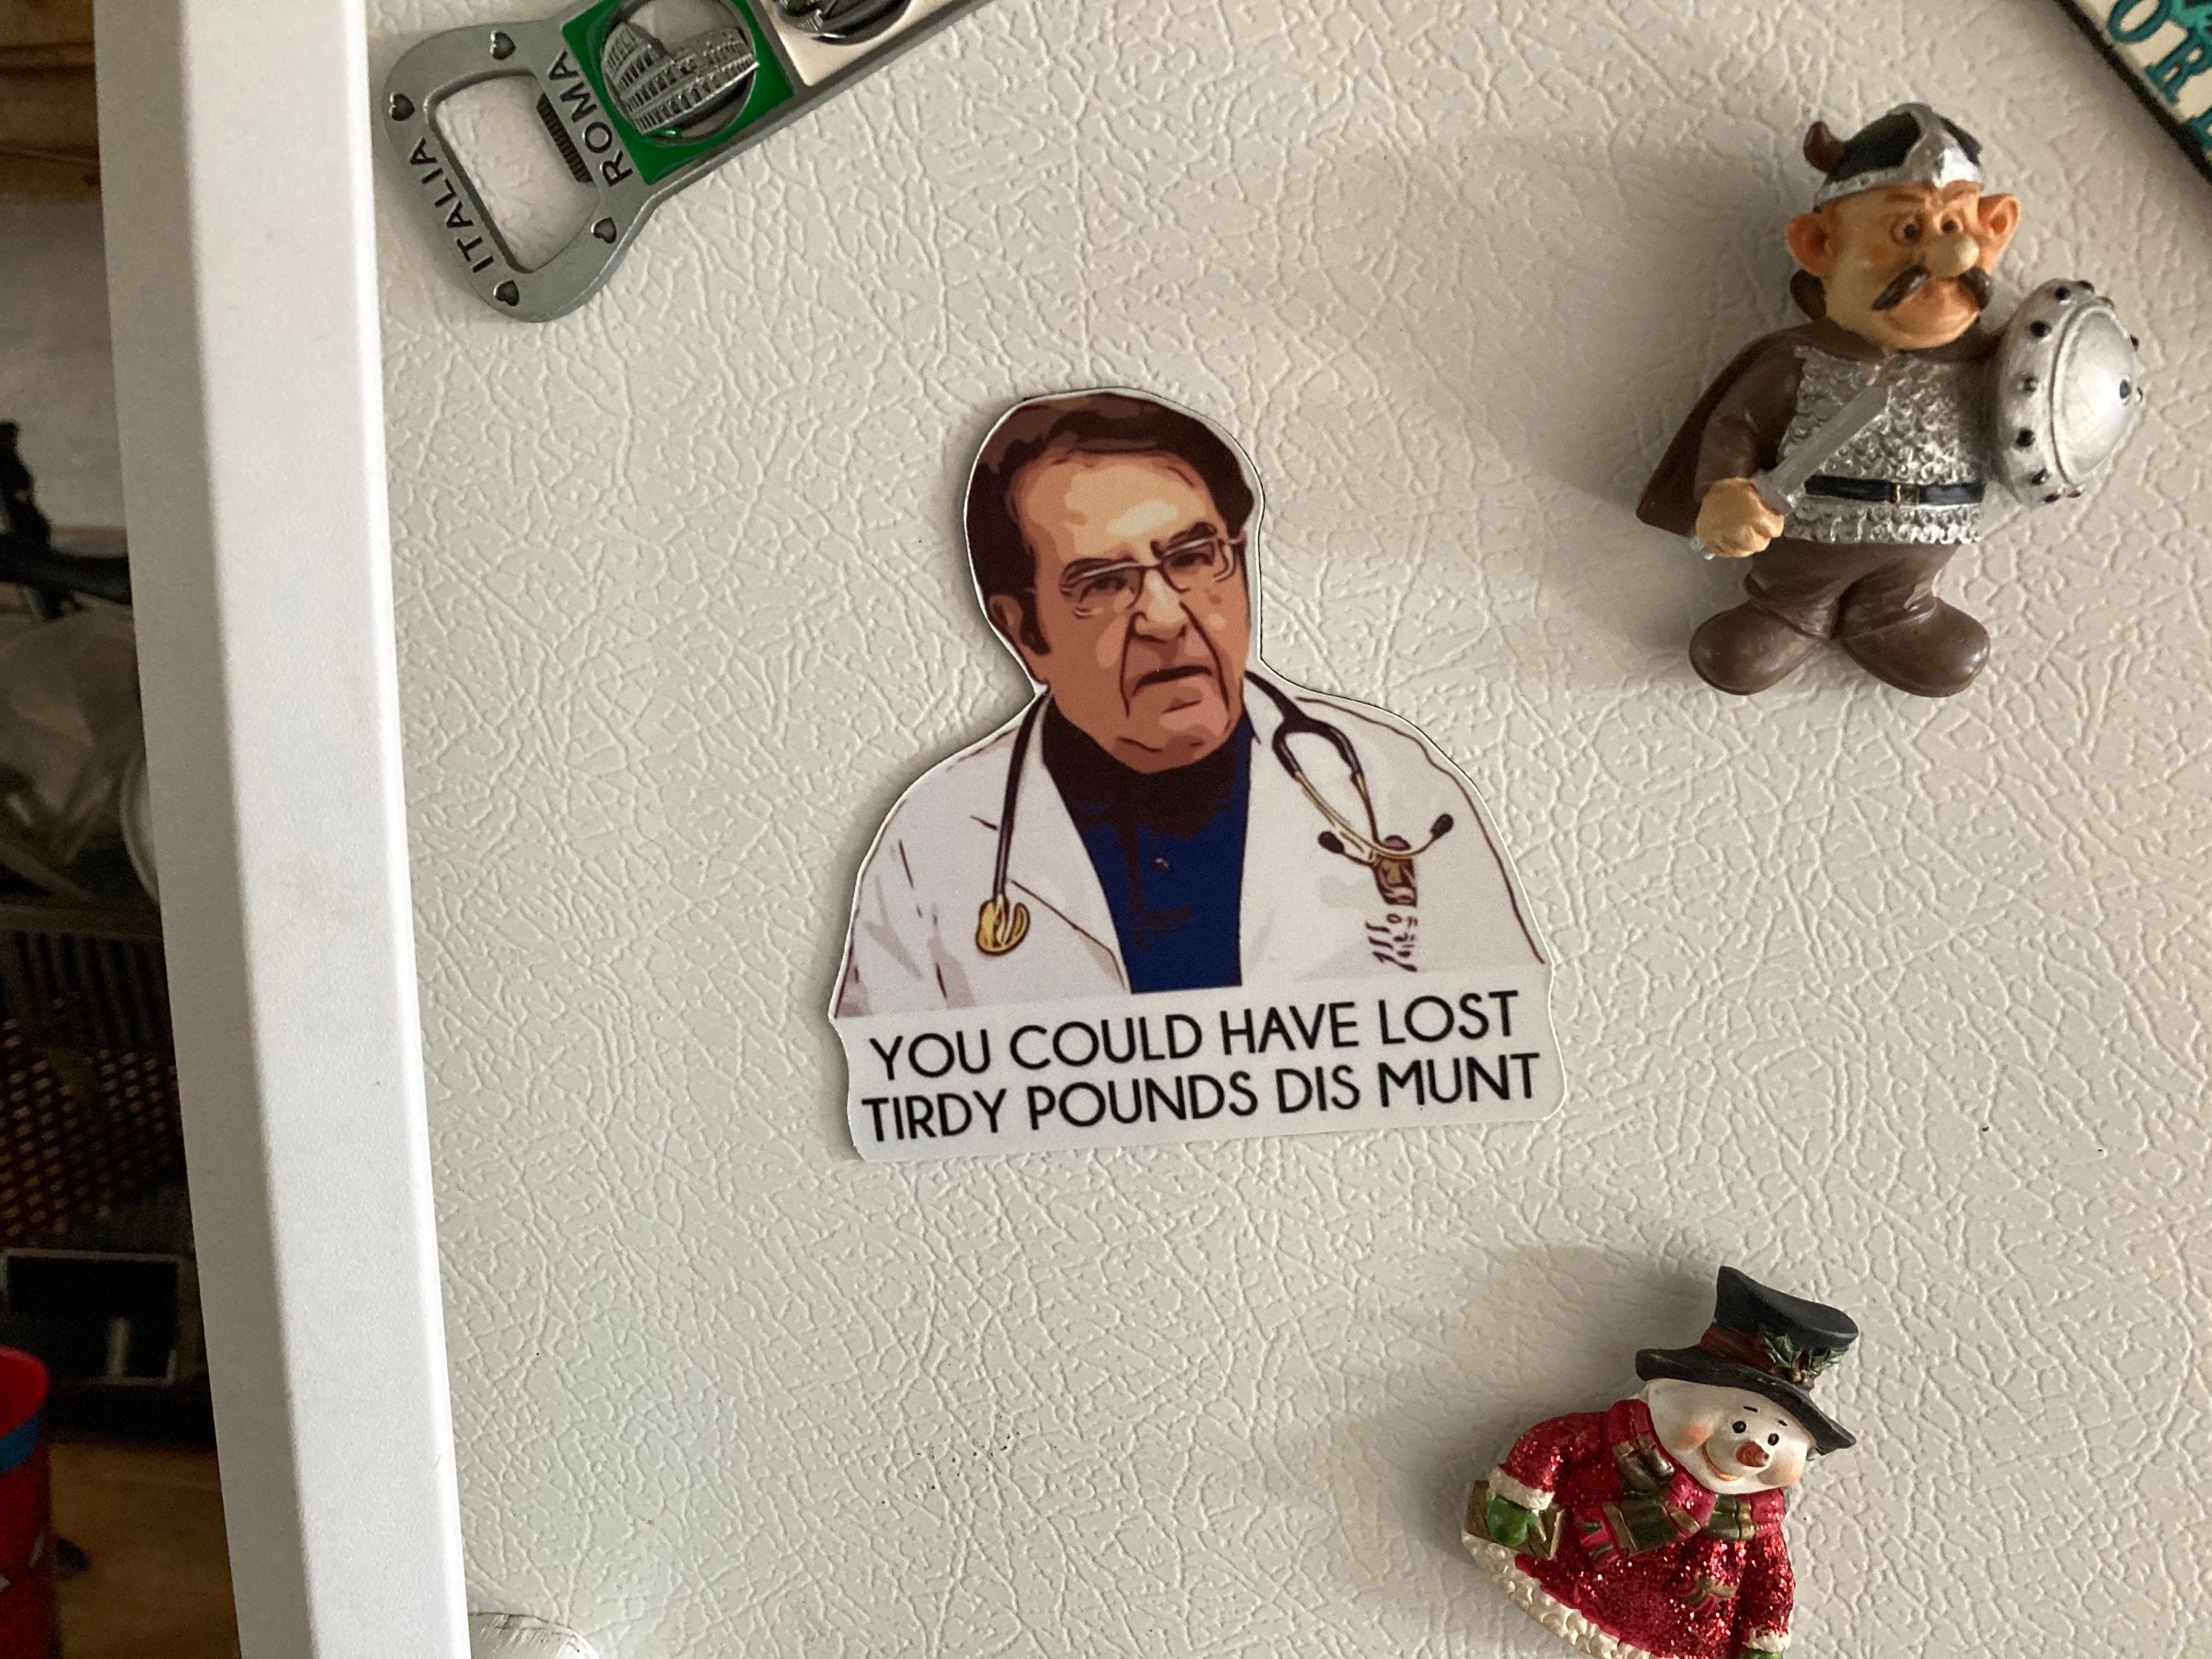 Dr. Nowzaradan 600 lb life Funny Humor Magnet For fridge Weight loss Custom